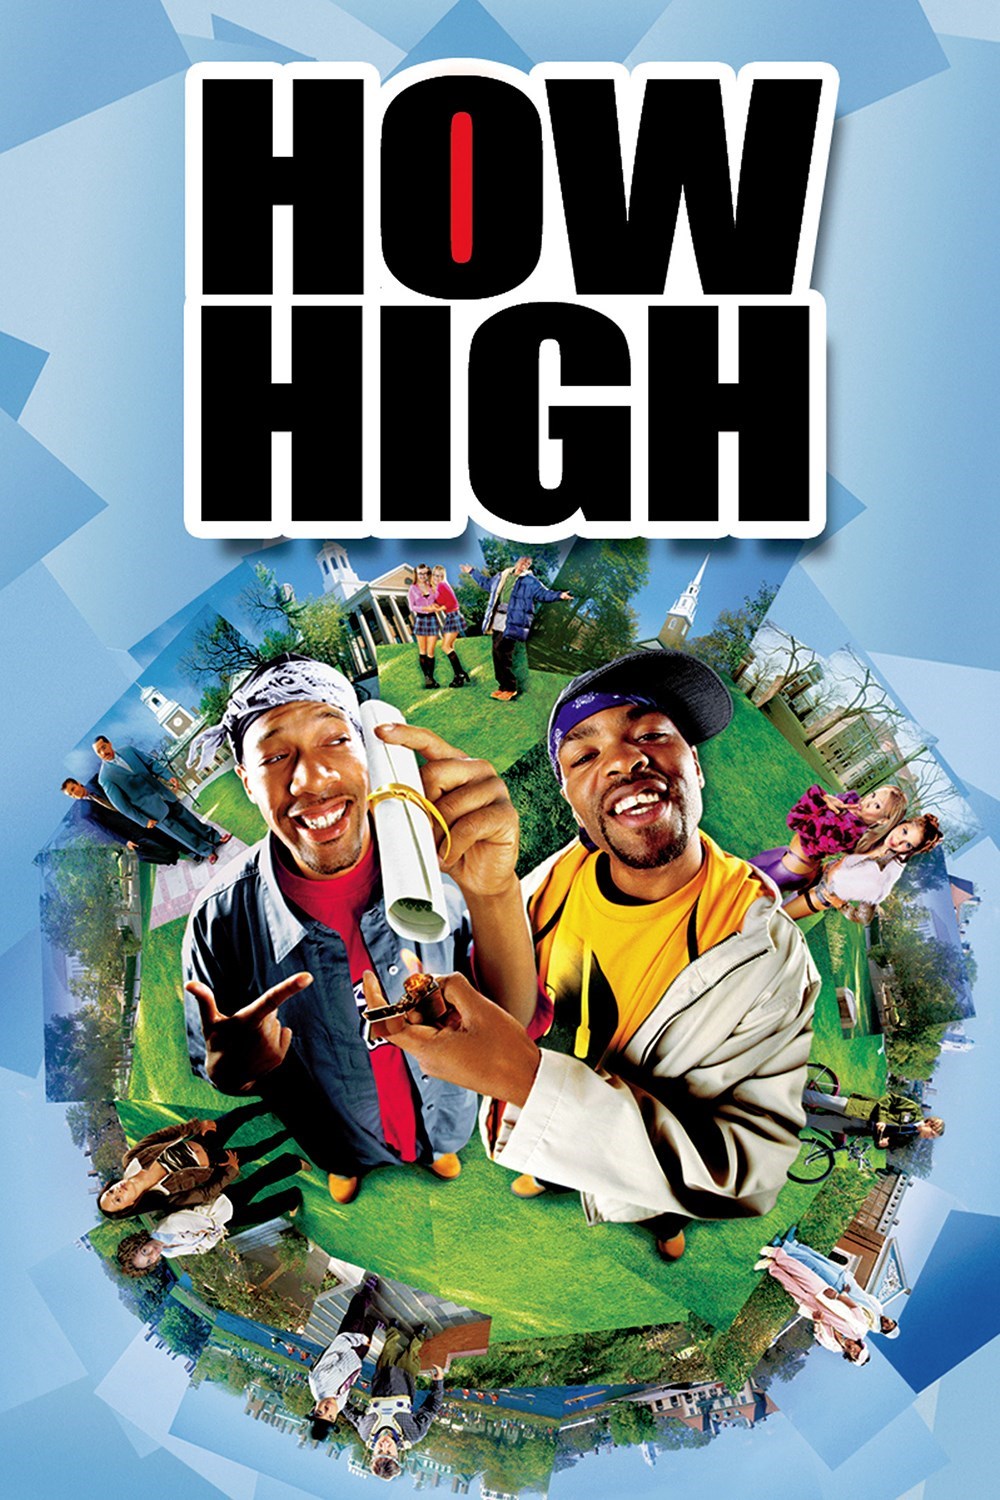 High & Low The Worst (2019) Method Man